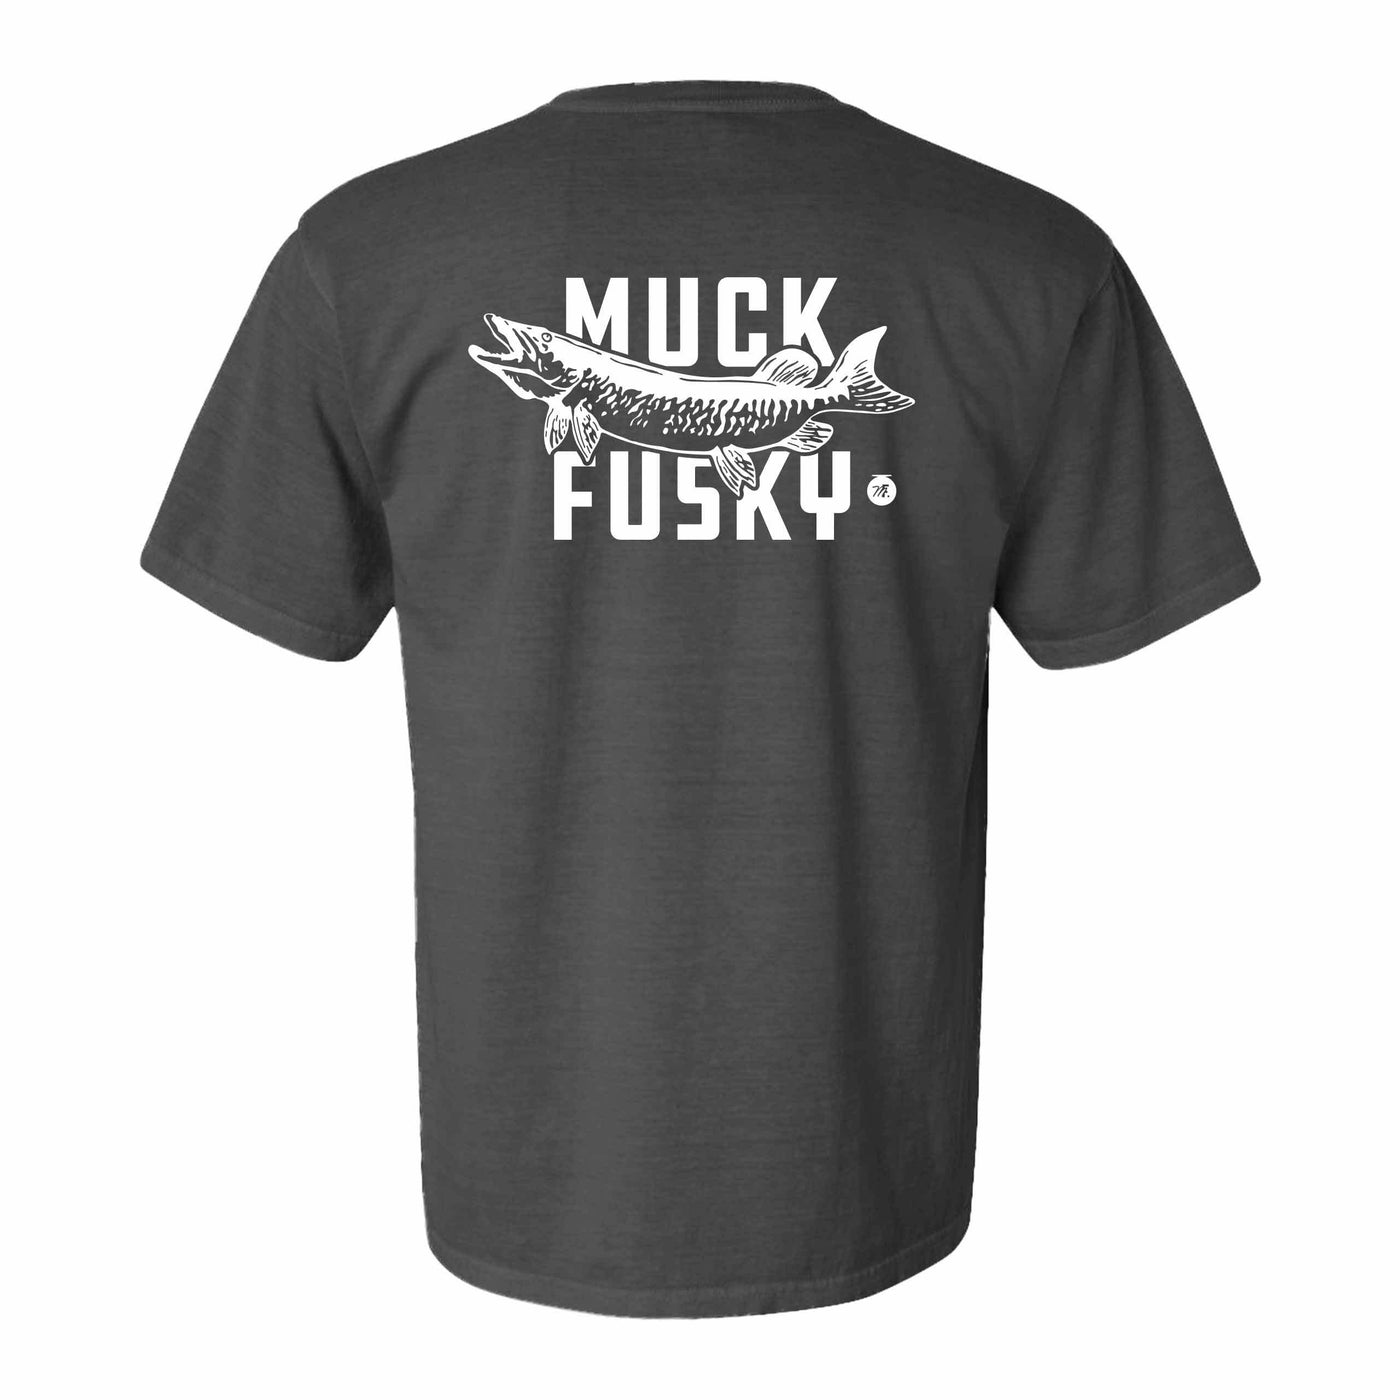 Musky Fool Muck Fusky Short Sleeve T-Shirt